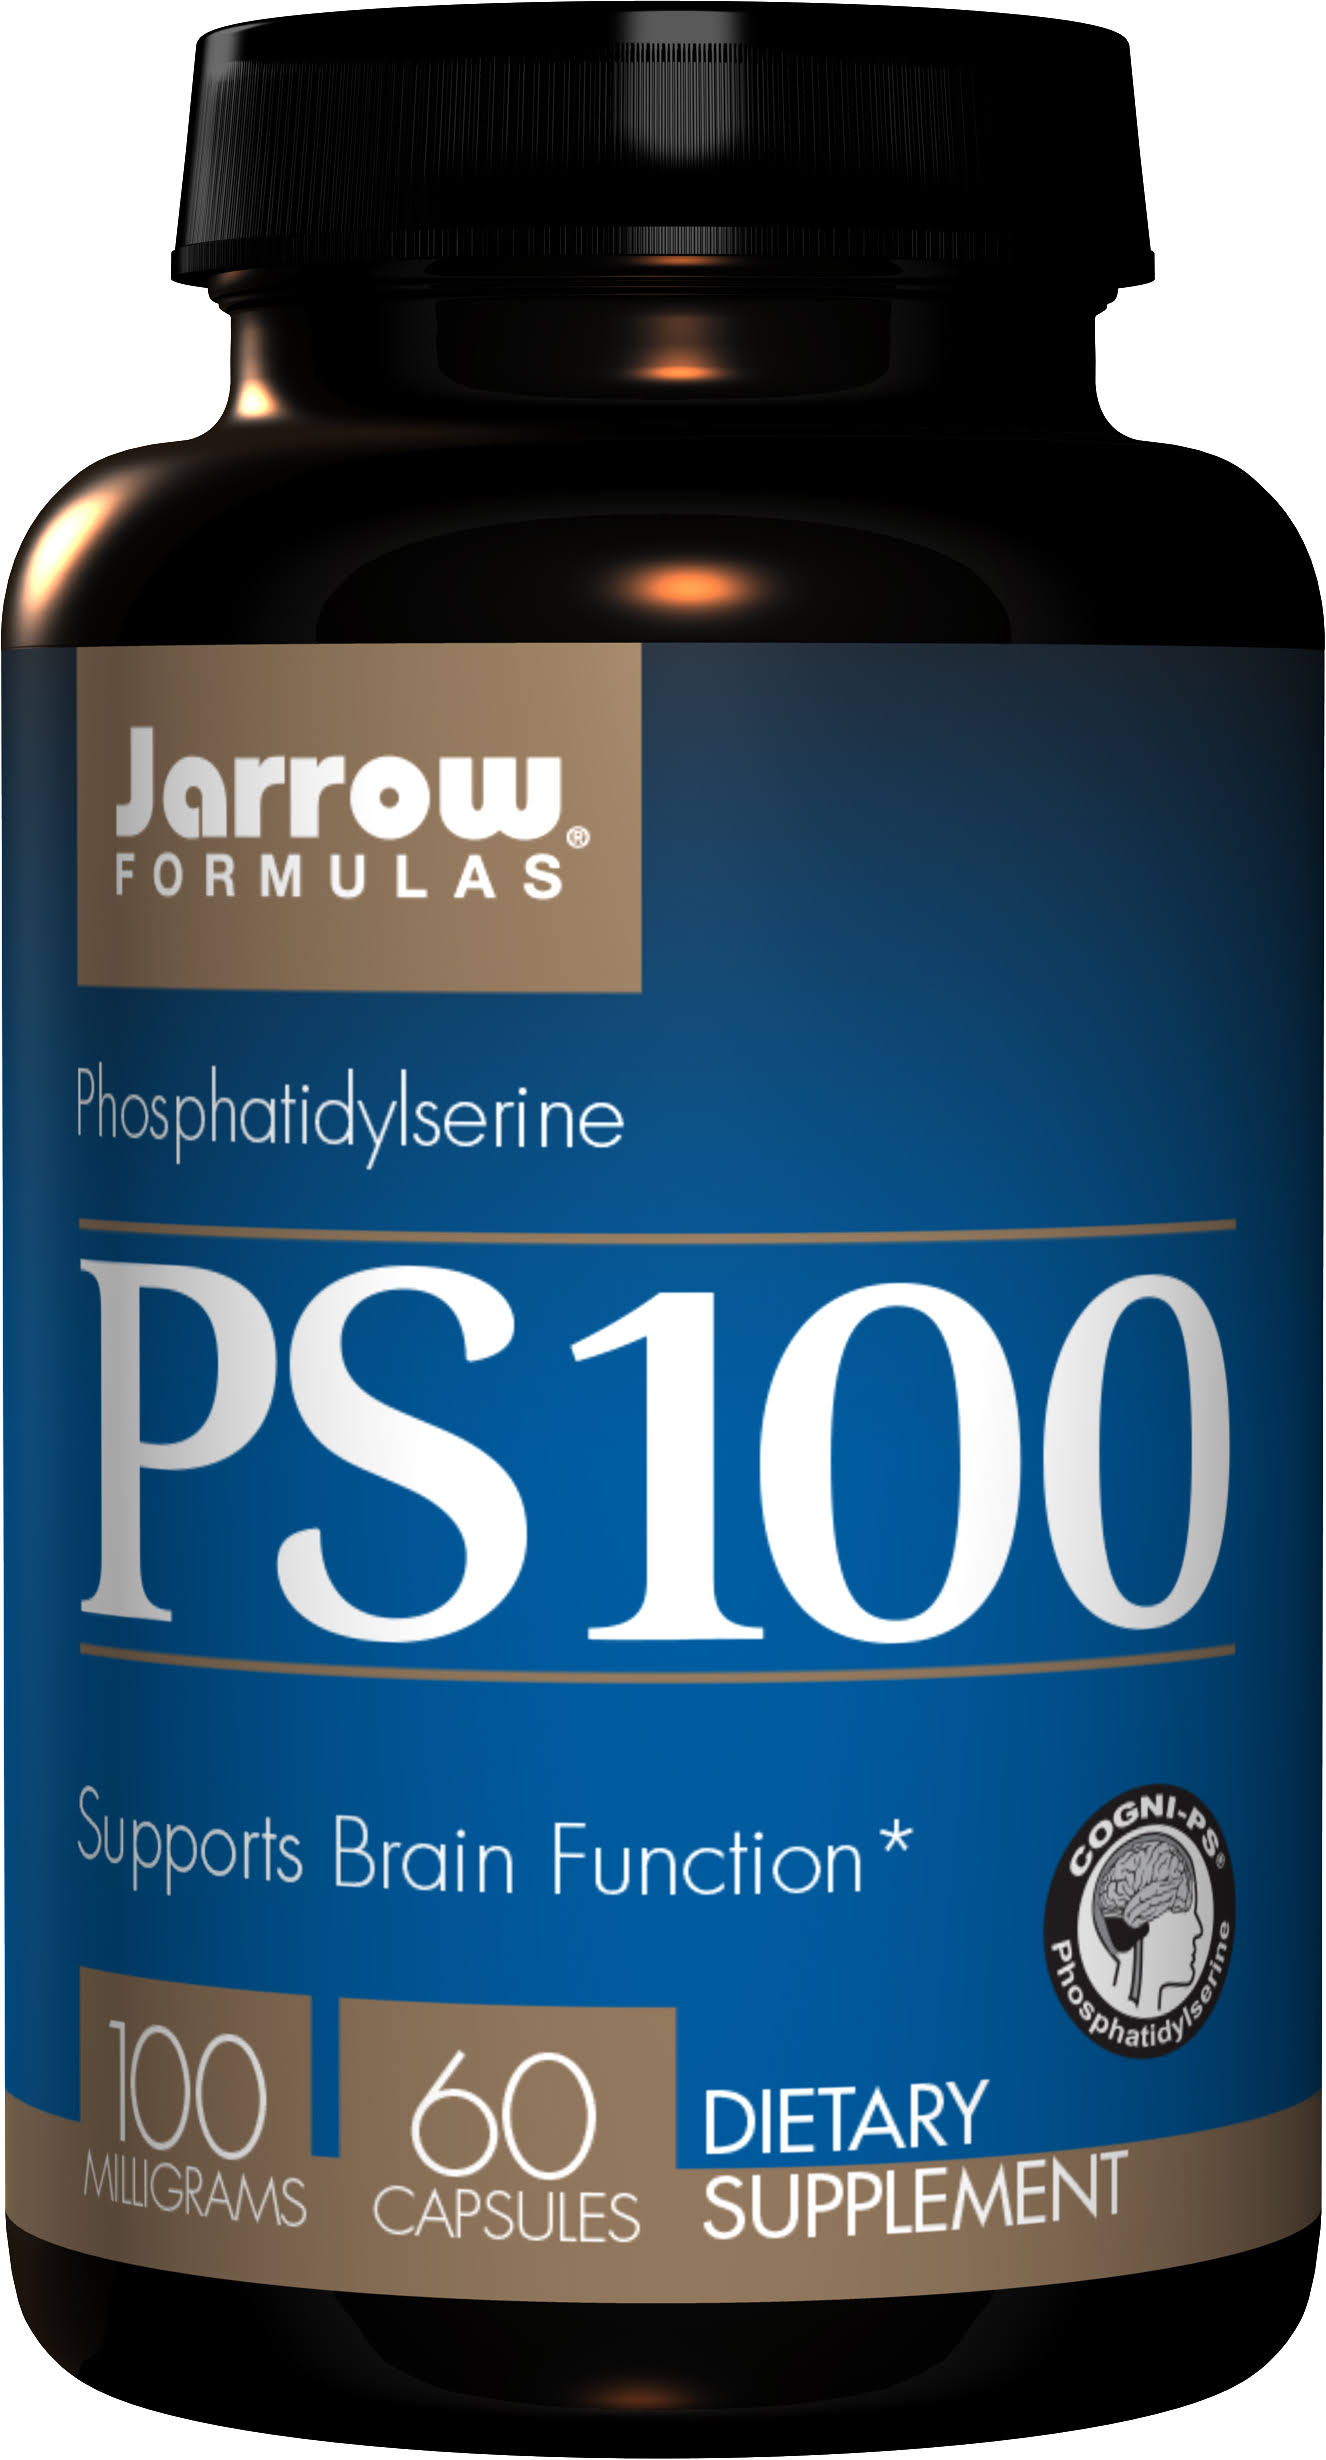 Jarrow Formulas Ps100 Supplement - 100mg, 60ct